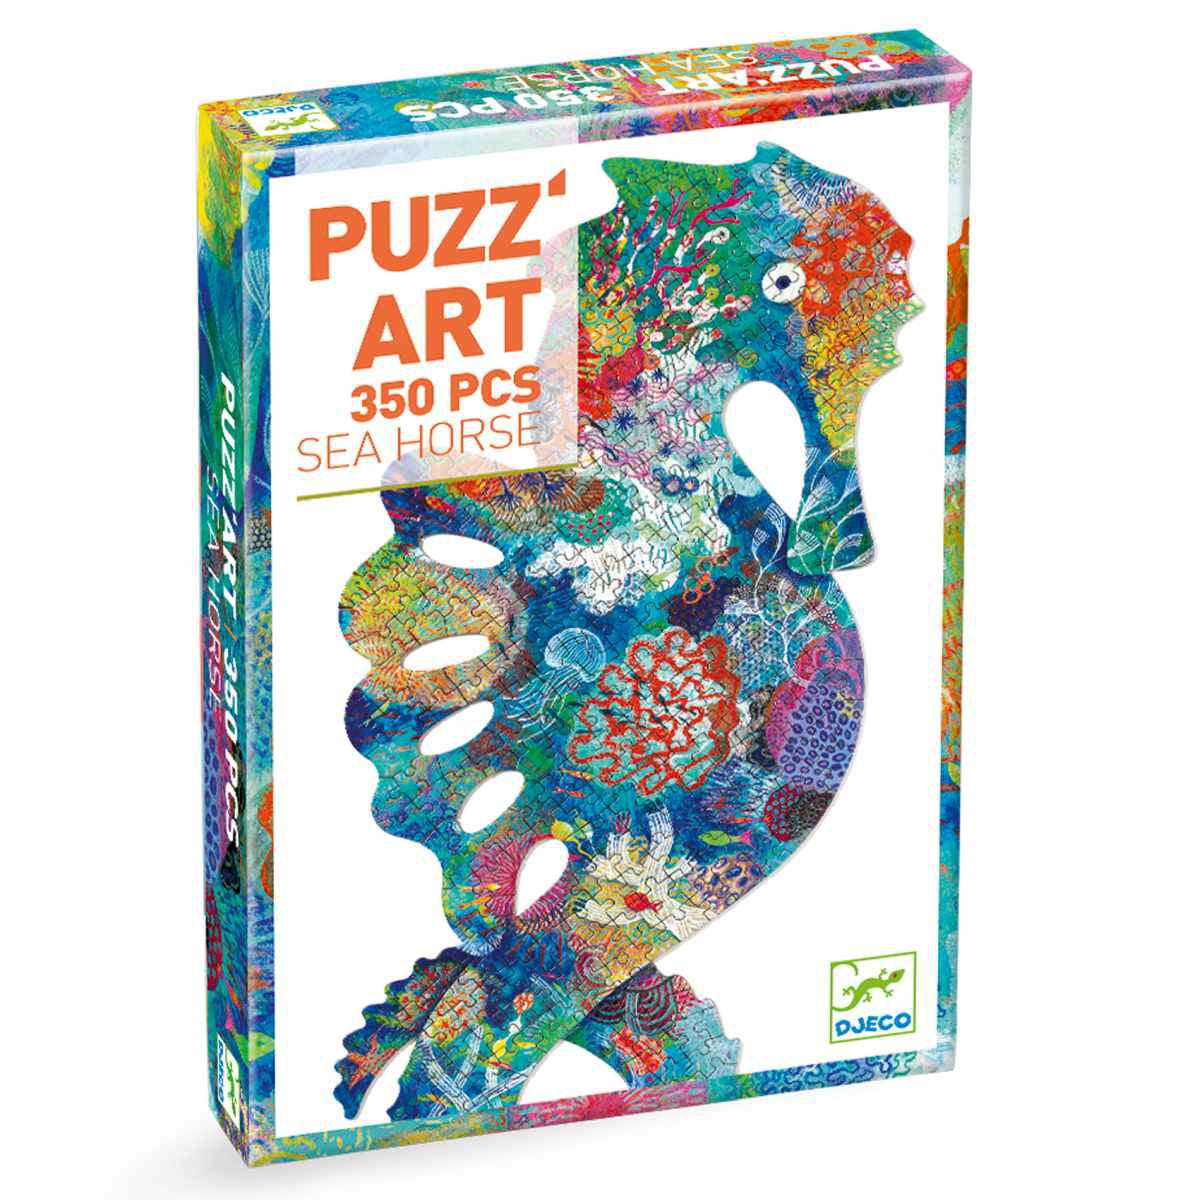 Puzzle Seepferdchen Puzz'Art 350 Teile | Djeco